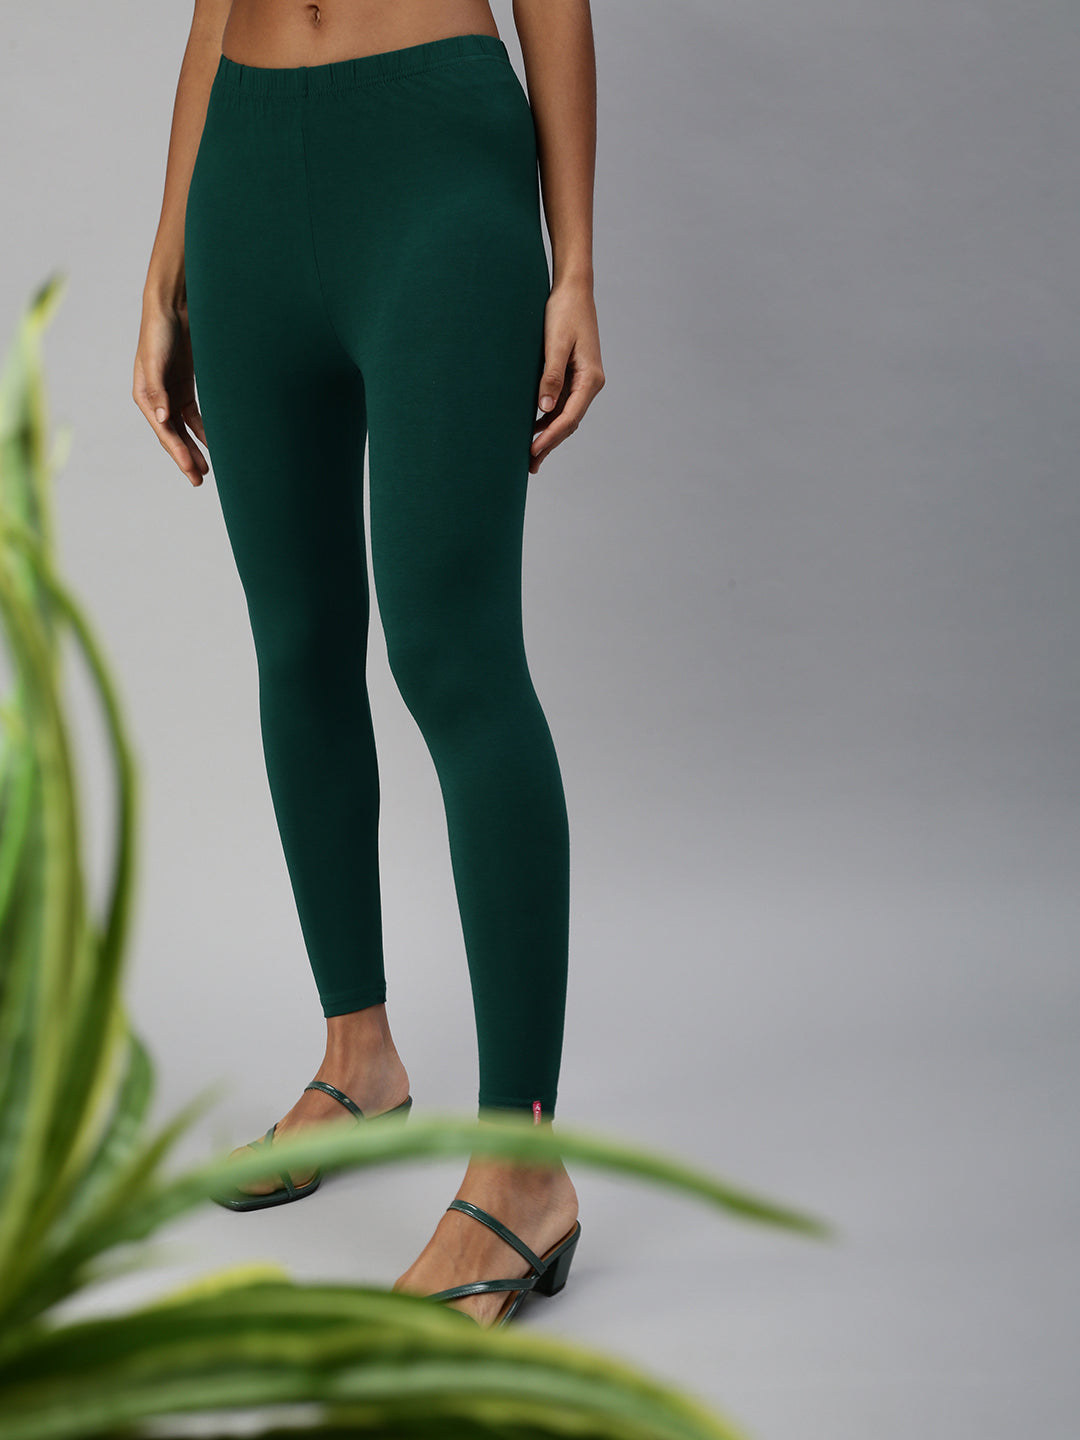 Missby Girl'S Black Side Stripe Slim Leggings (10-11 Years) : Amazon.in:  Fashion